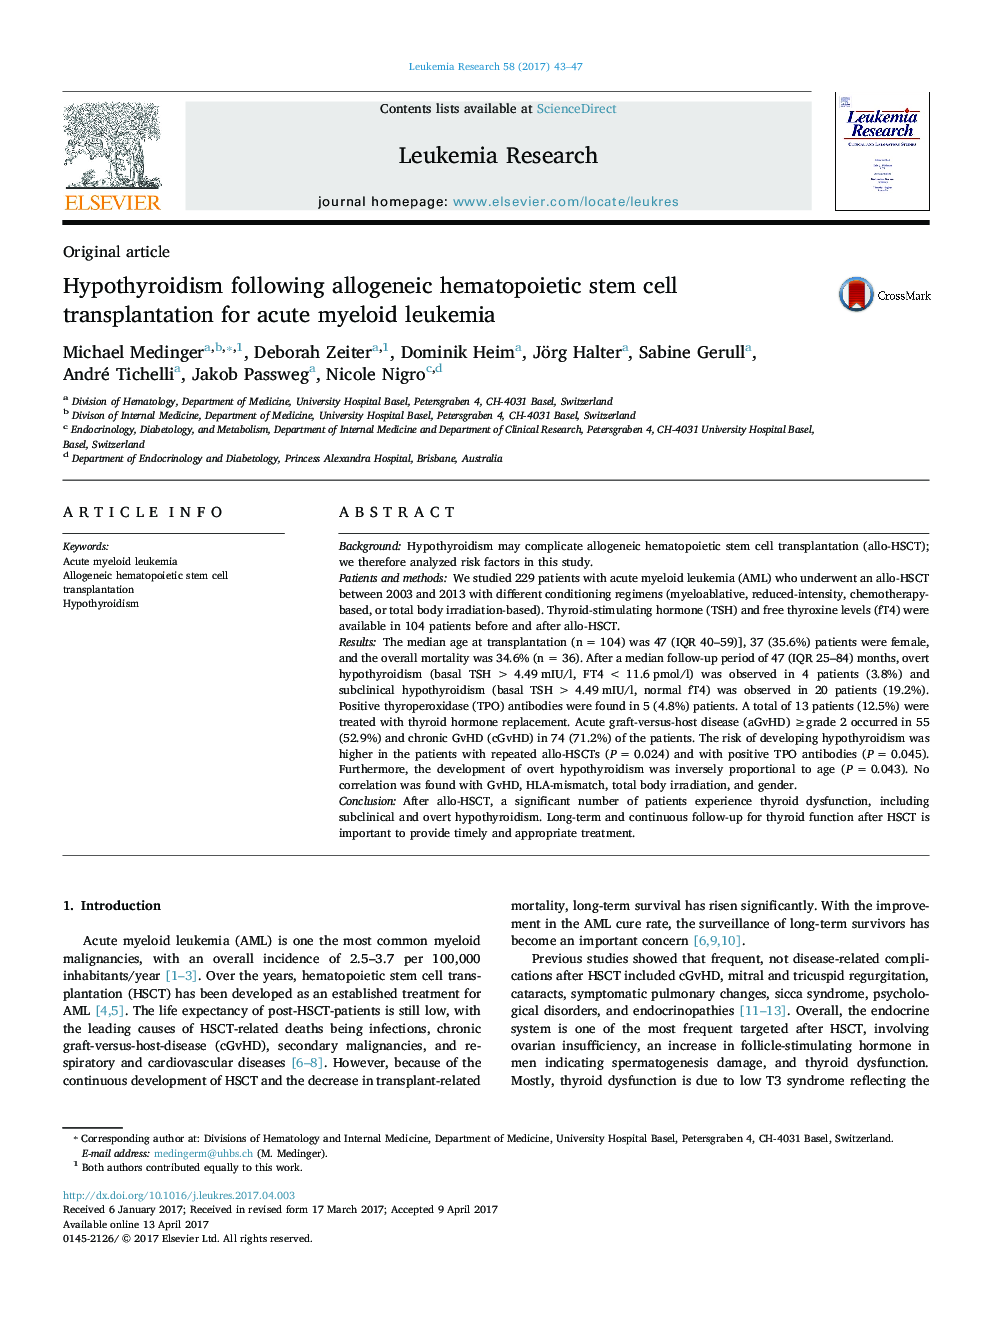 Original articleHypothyroidism following allogeneic hematopoietic stem cell transplantation for acute myeloid leukemia